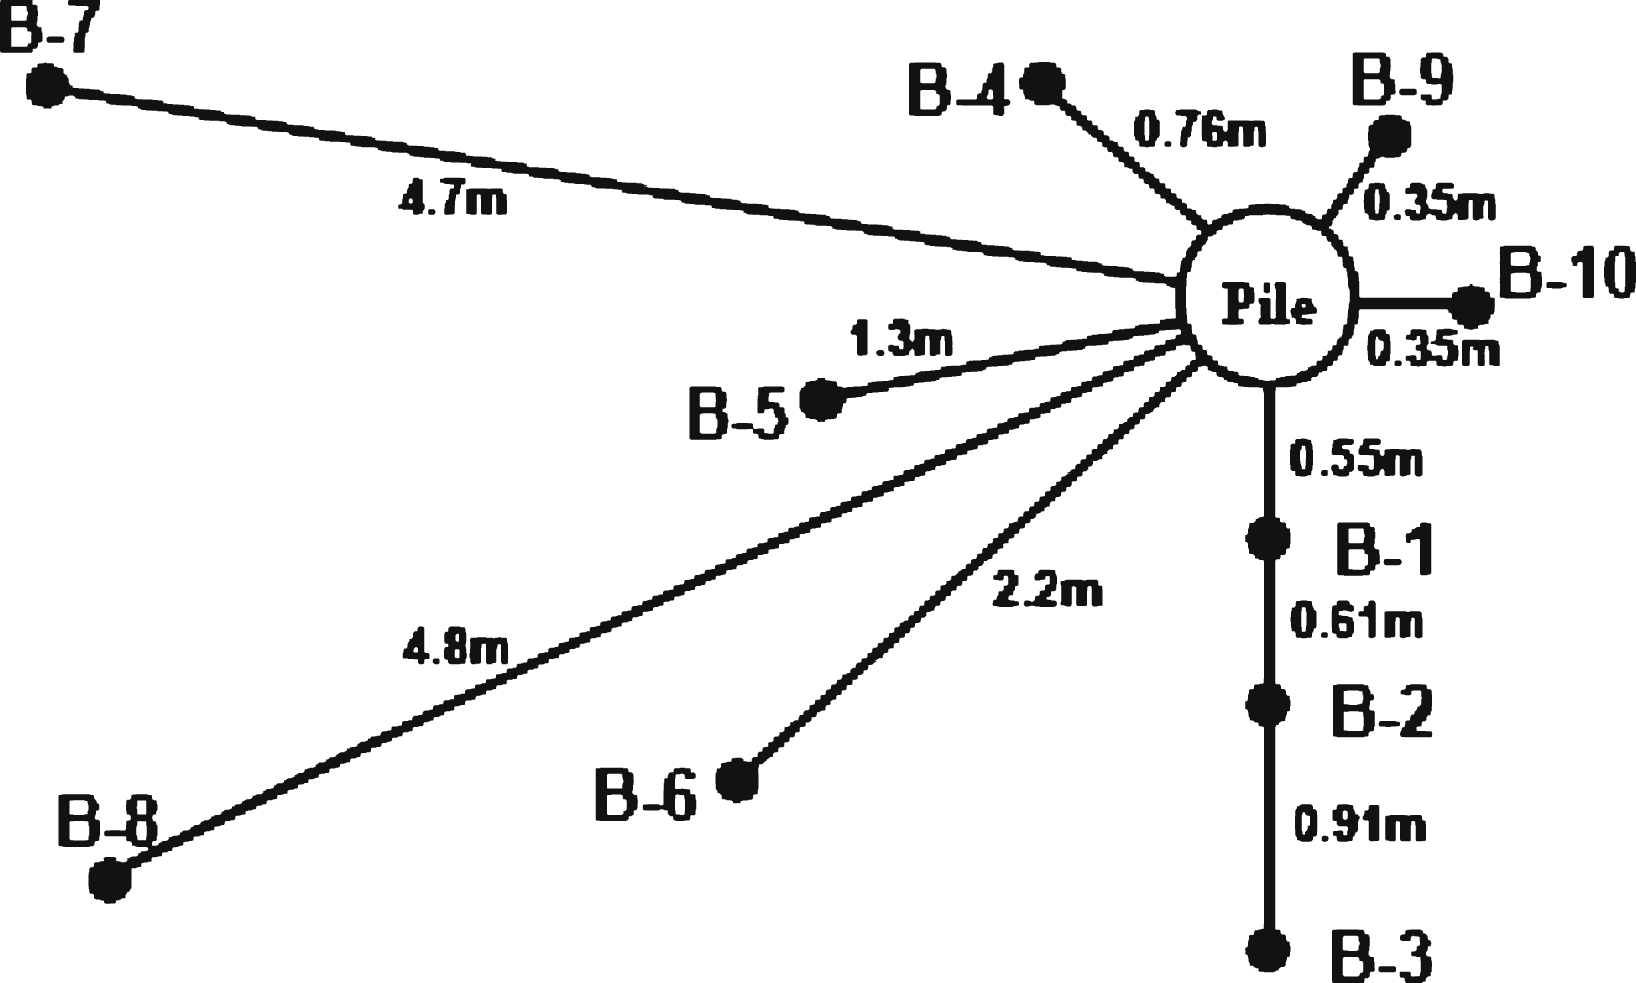 Borehole layout relative to pile location.